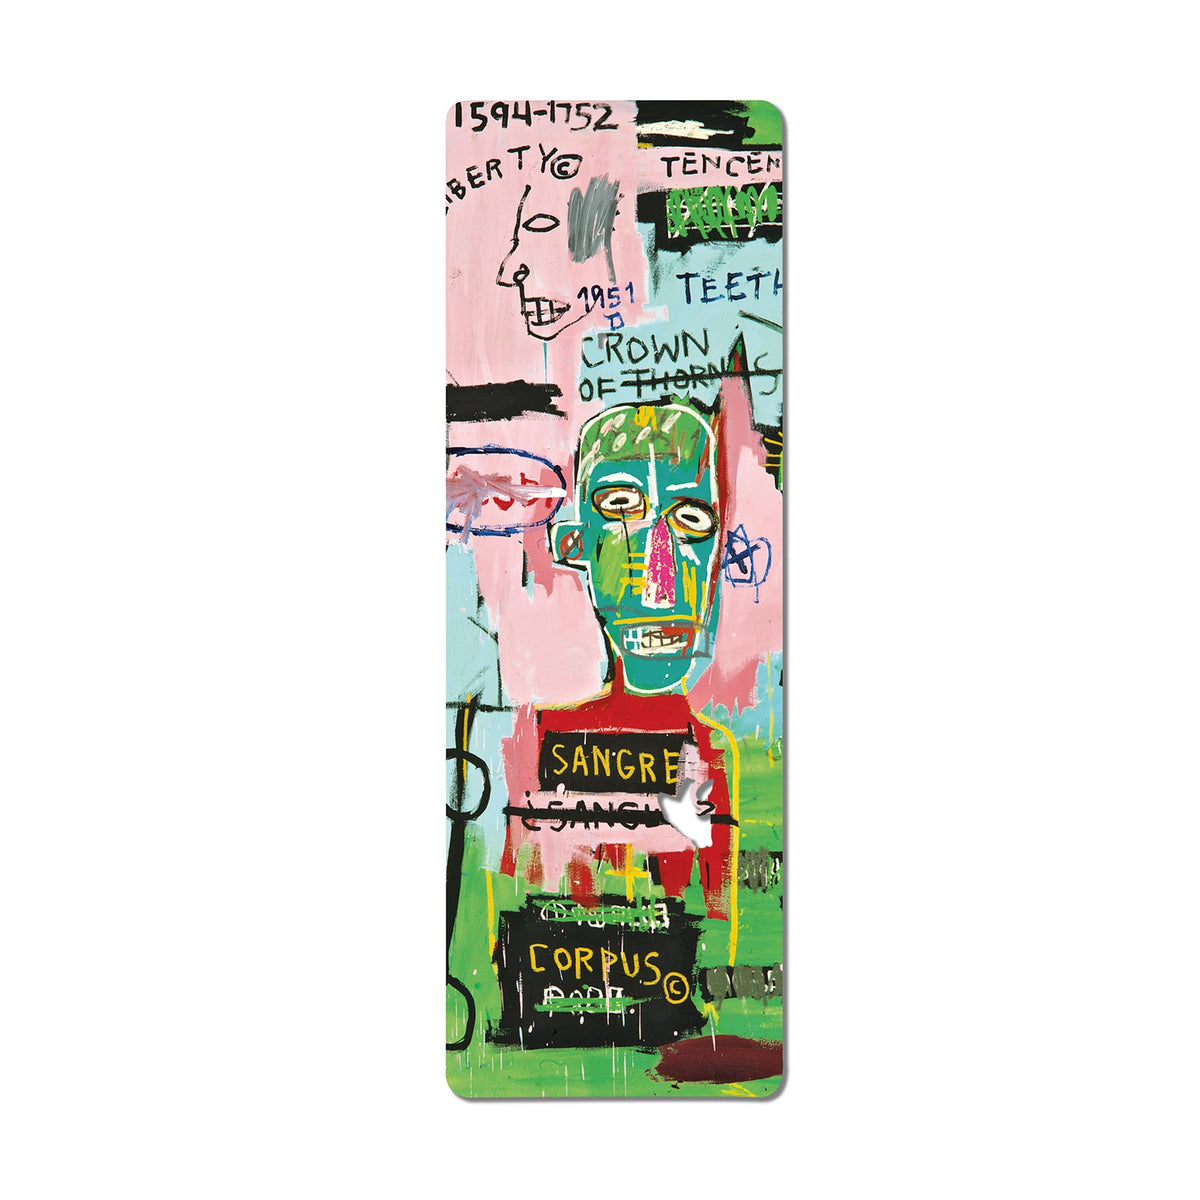 Basquiat ”In Italian” Rubber Exercise Mat